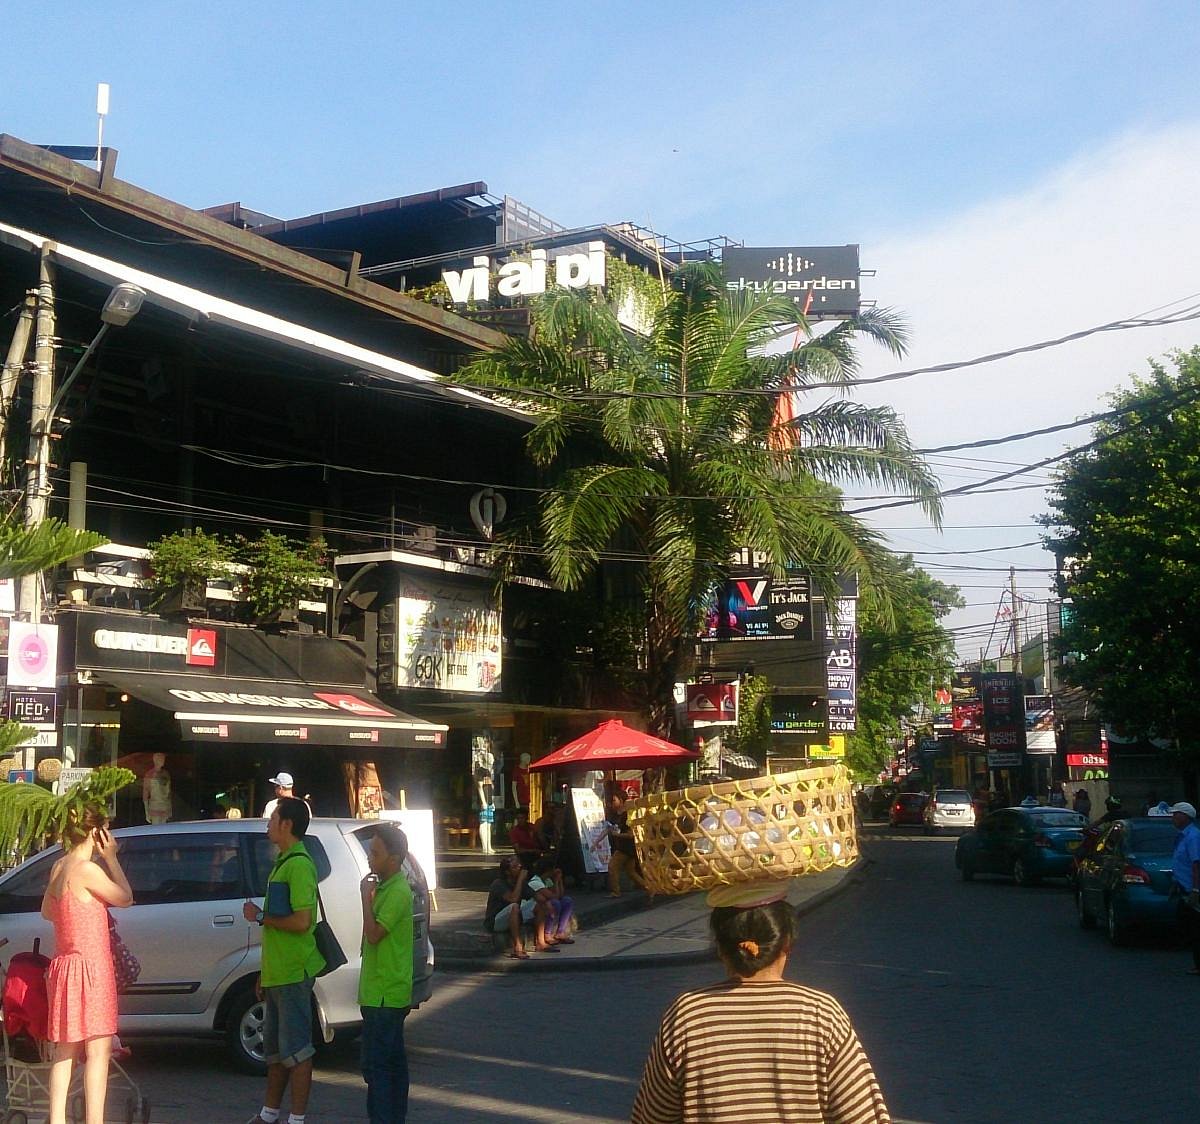 Shopping in Legian - Bali Accommodation, Tours, Transport & Bali Guide